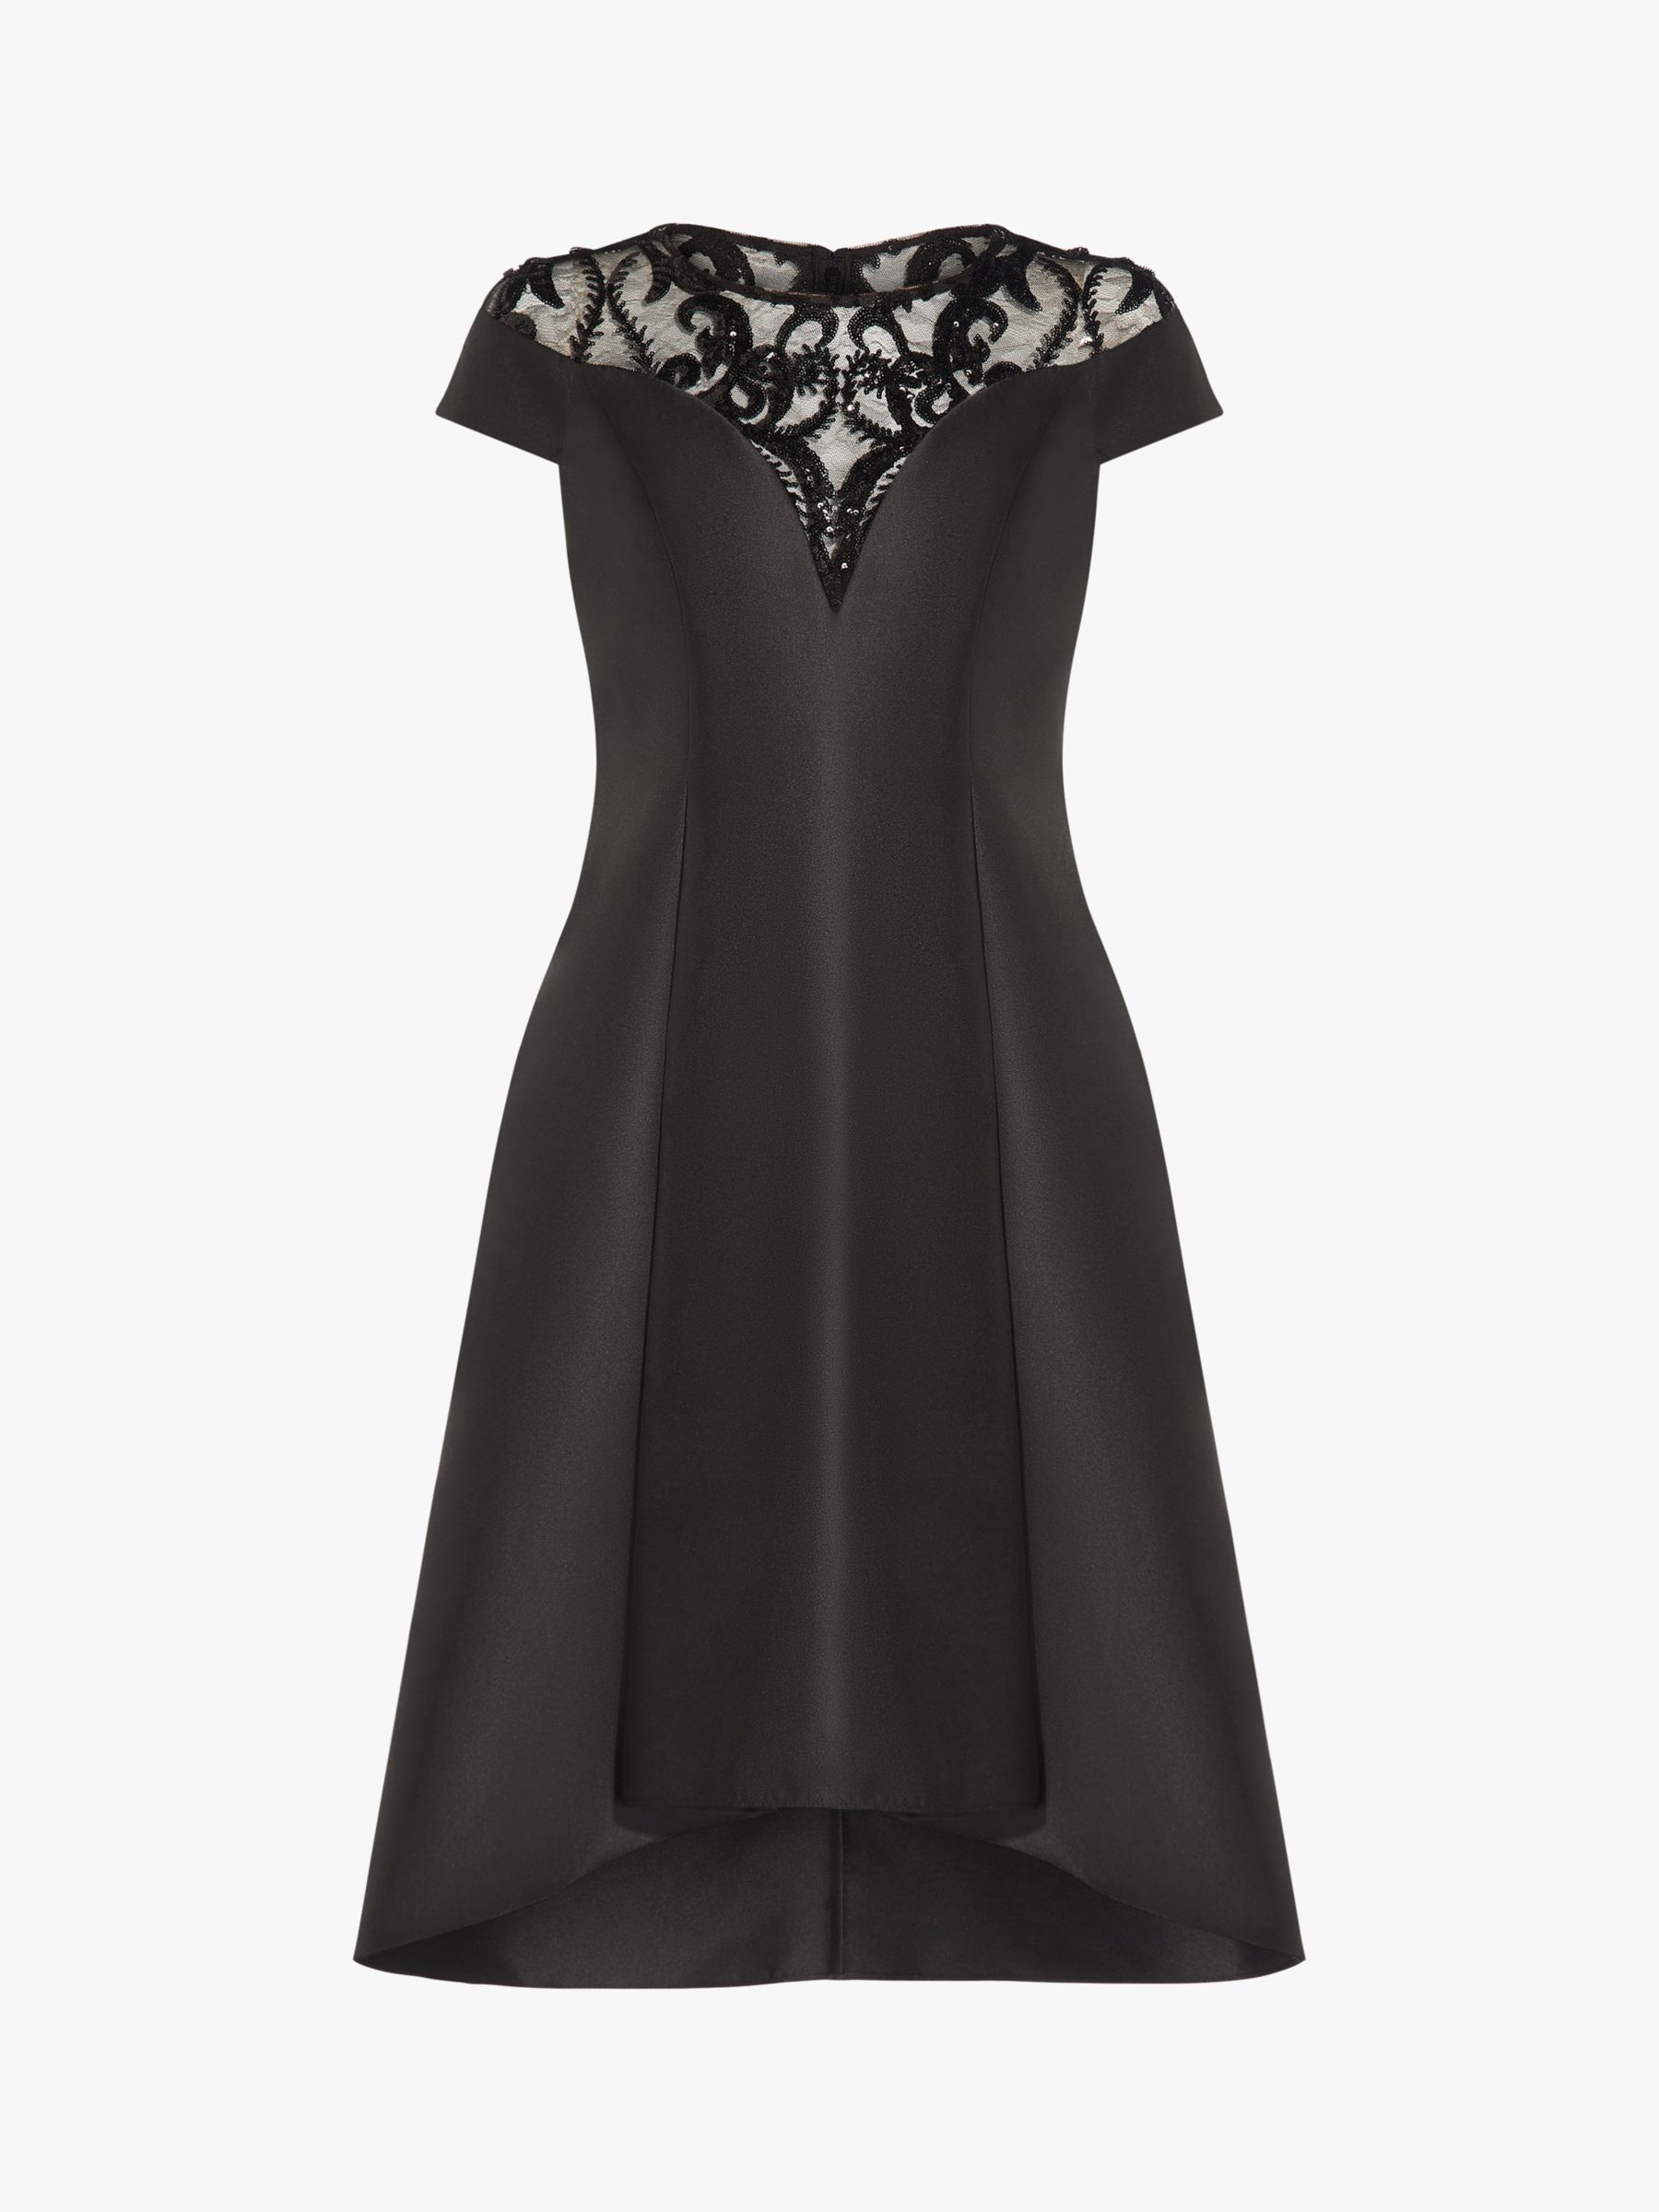 Adrianna Papell Sequin Mikado Dress, Black